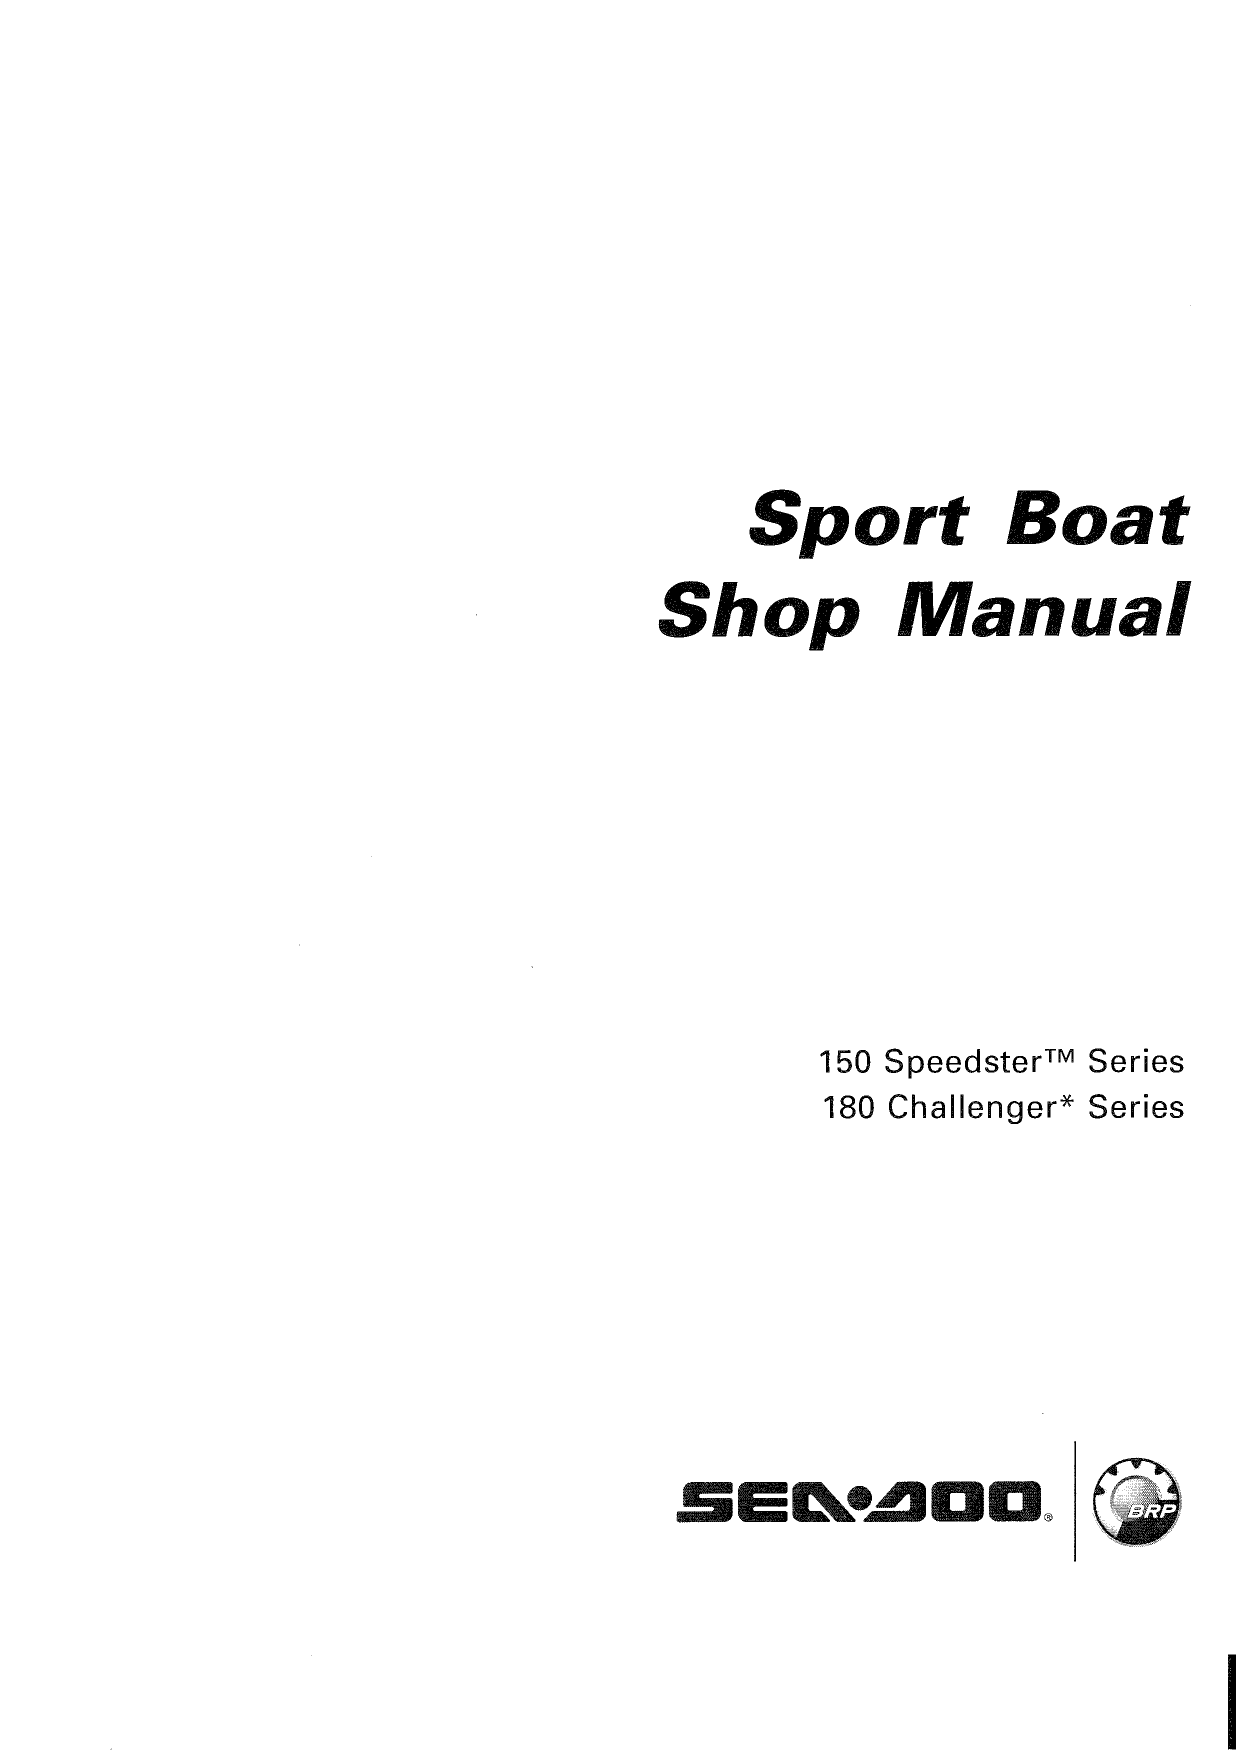 2007 BRP 150 Speedster, 180 Challenger Sea-Doo service manual Preview image 2